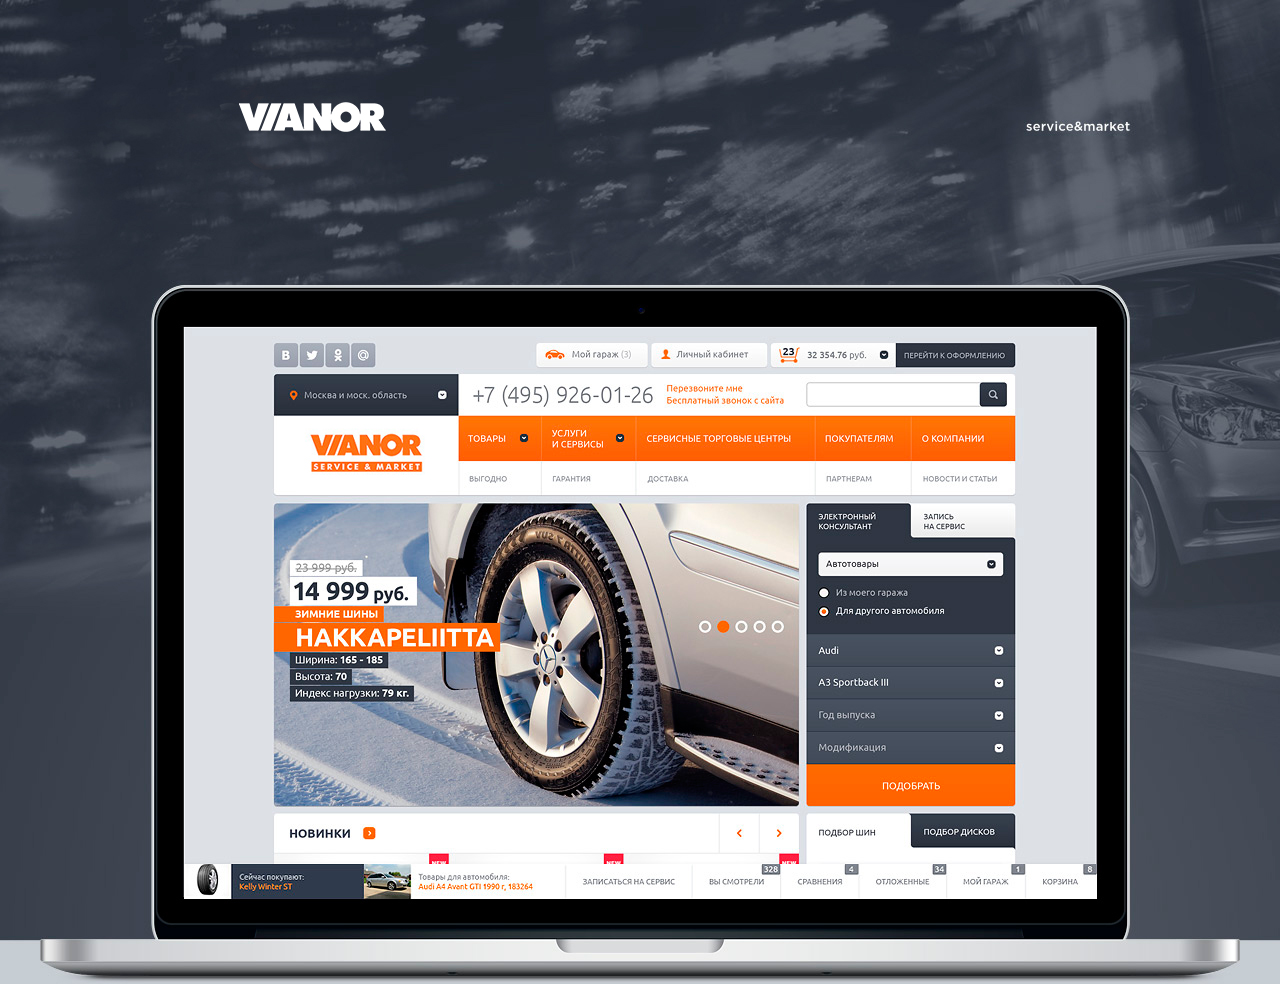 Vianor Service & Market
Аналитика / Дизайн / Фронтенд-программирование / Бэкенд-программирование
© No Logo Studio